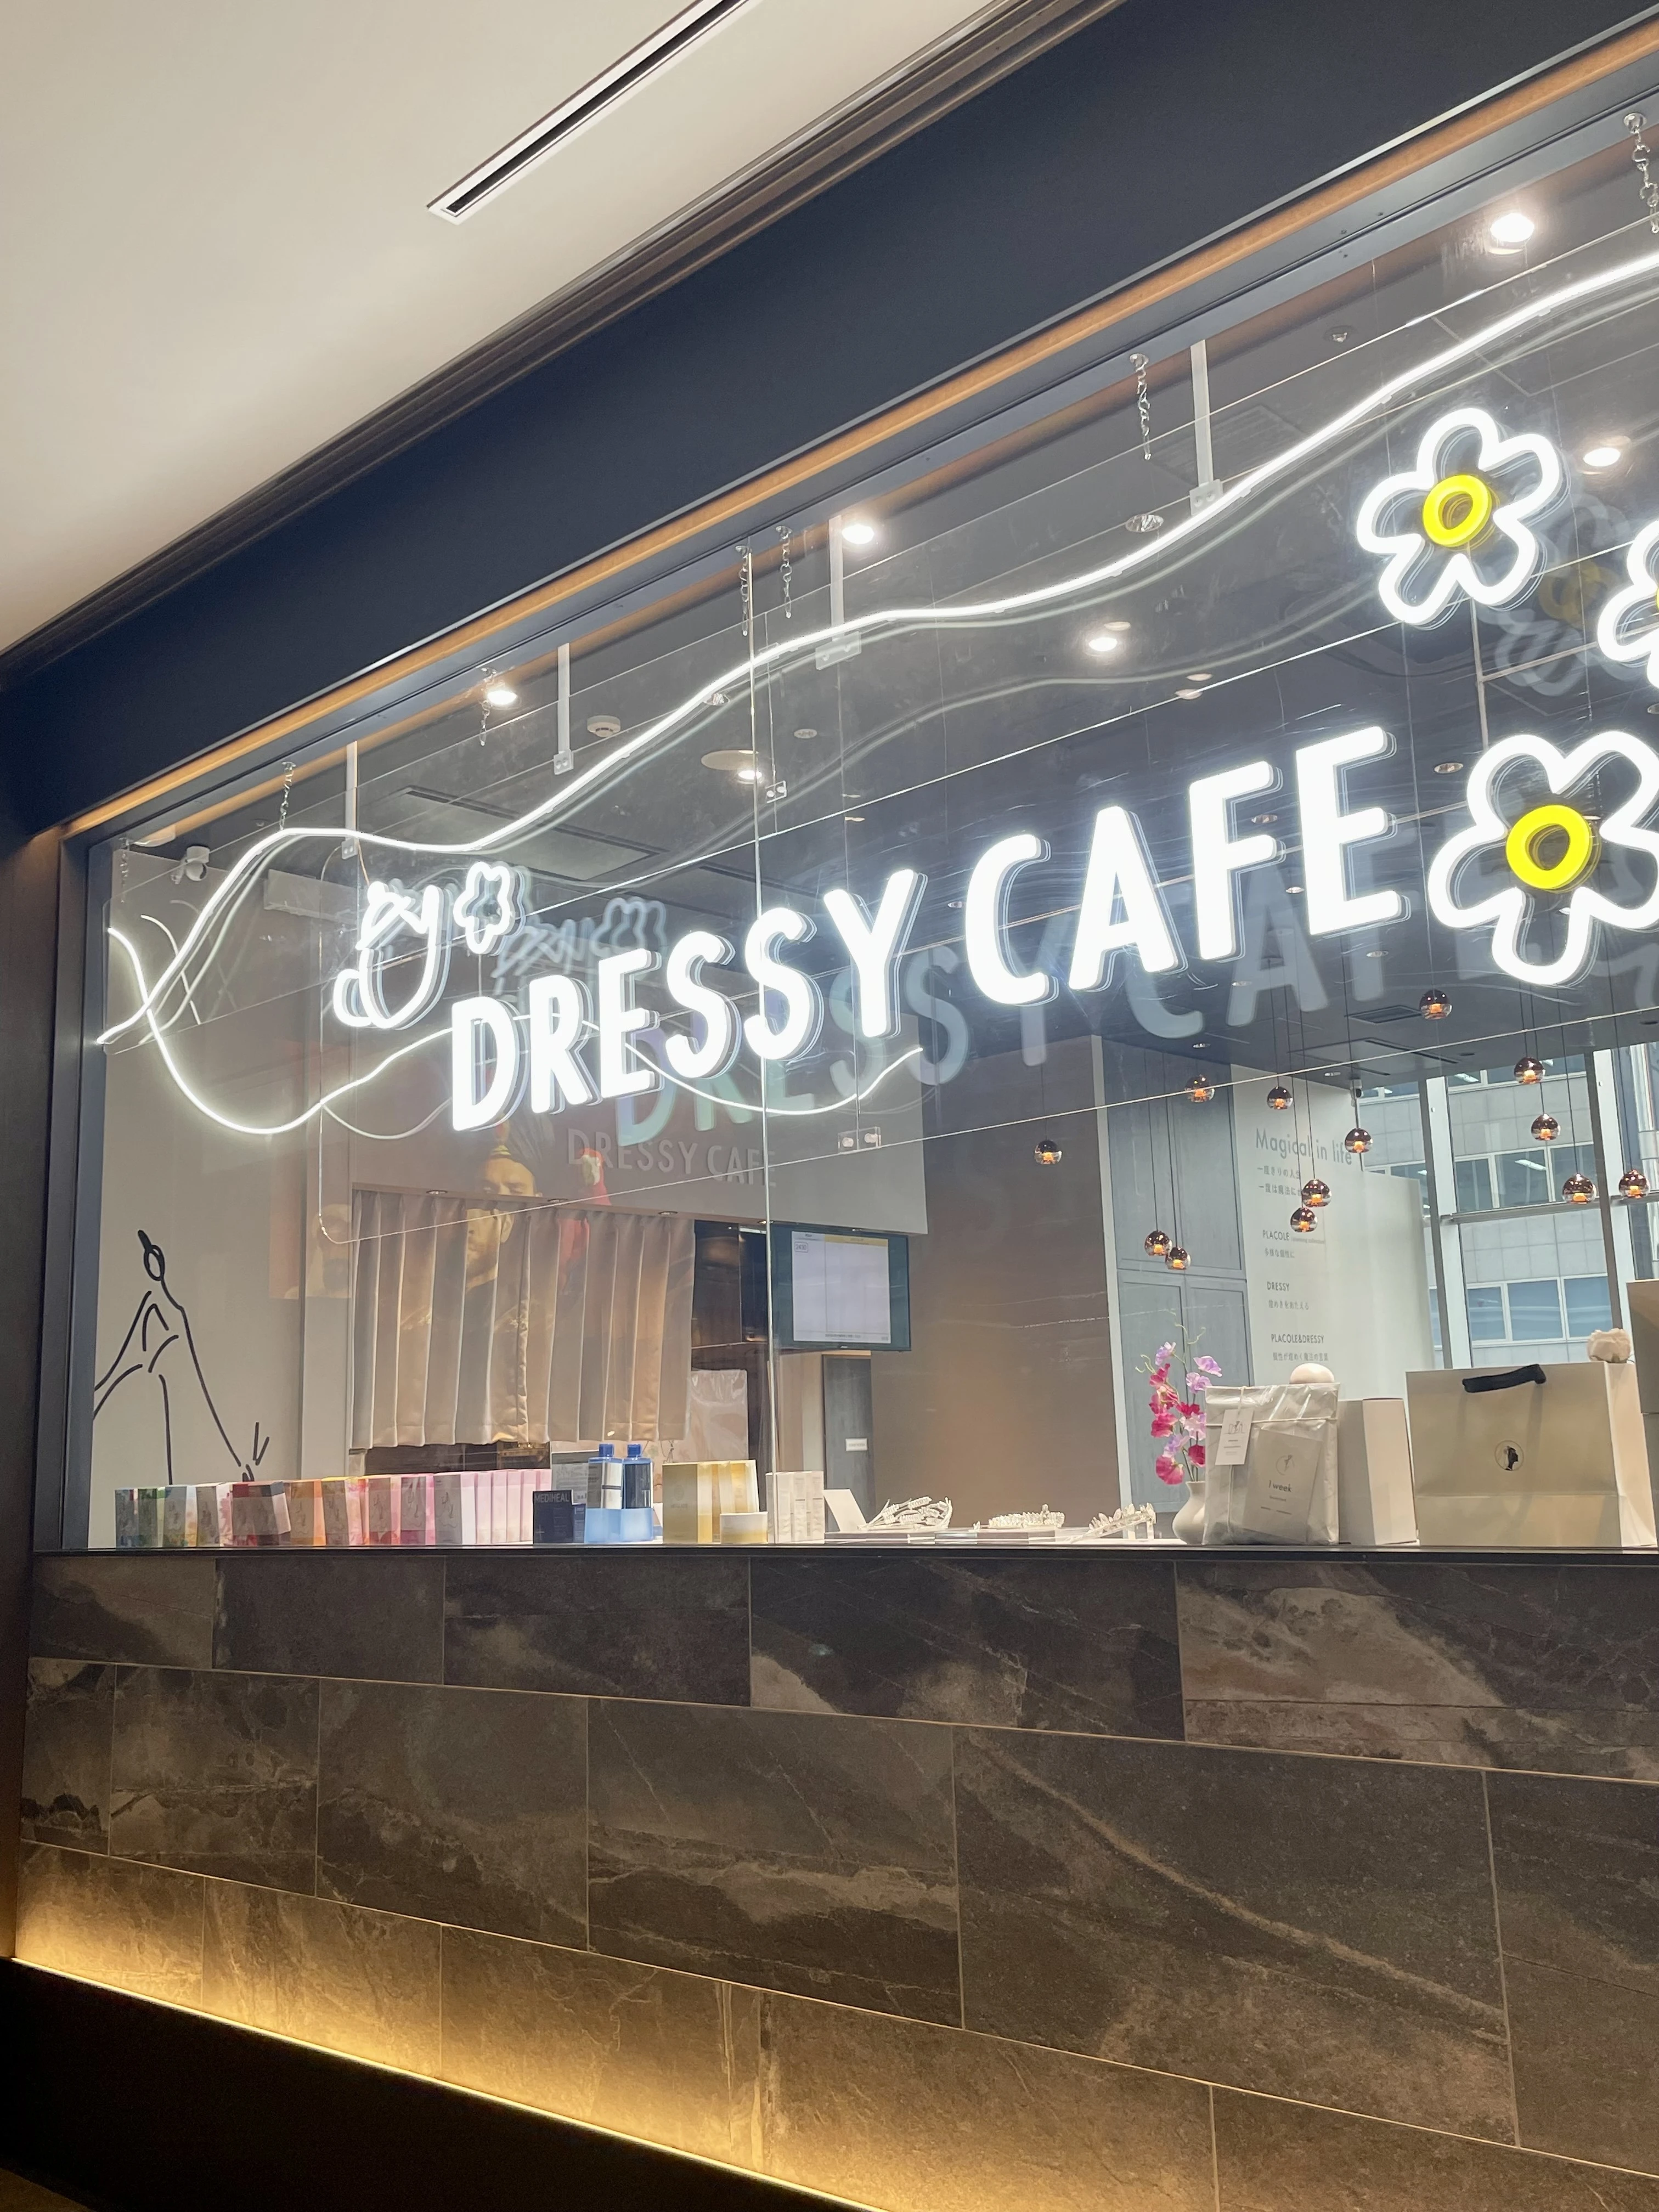 Dressy cafe